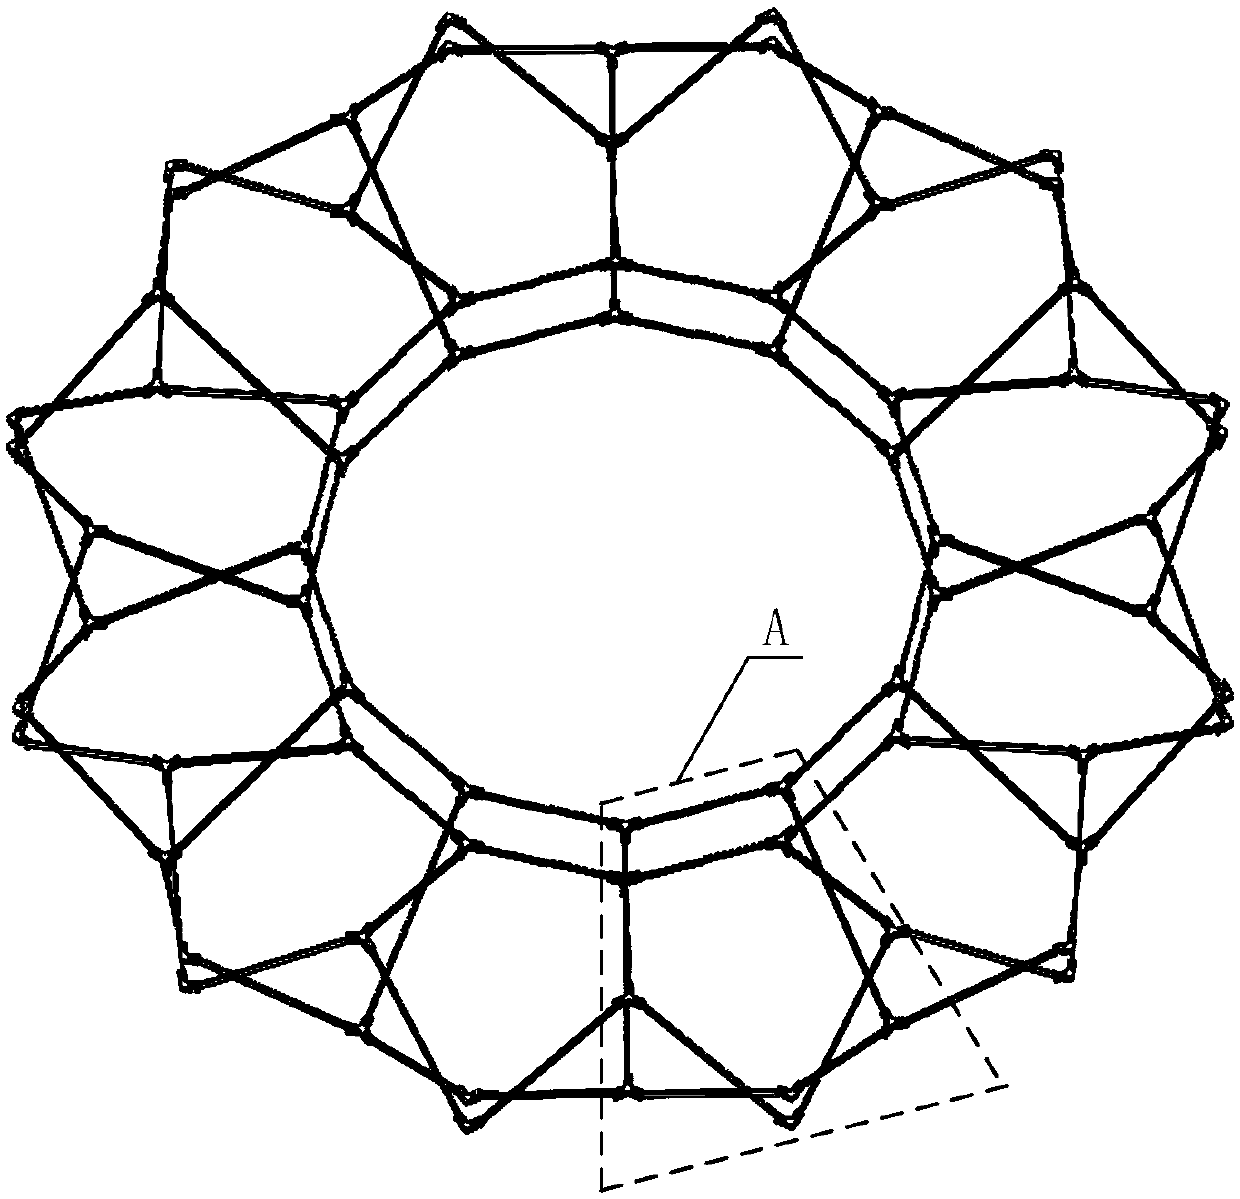 Sun-flower-shaped annular truss deployable antenna mechanism based on shear elements